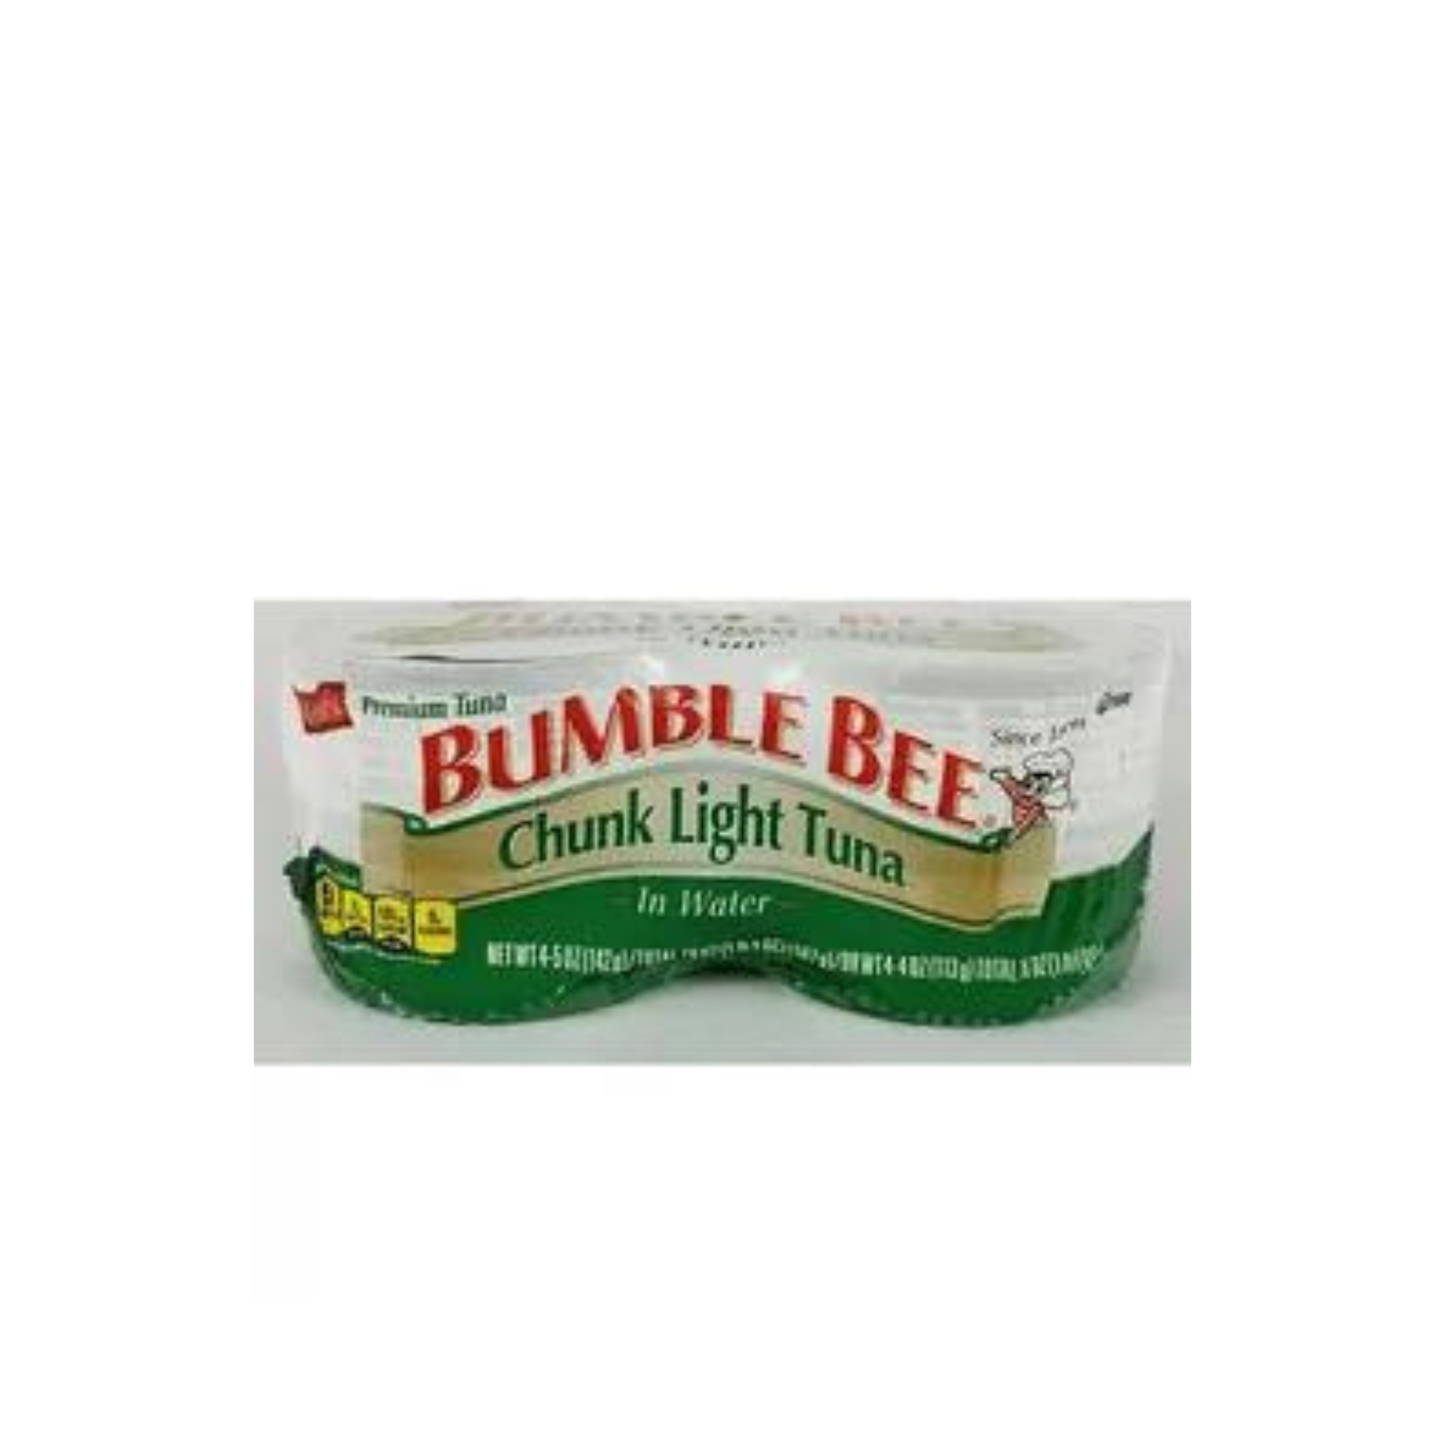 Bumble Bee Tuna Fish in Water - 106g - 4 Pack